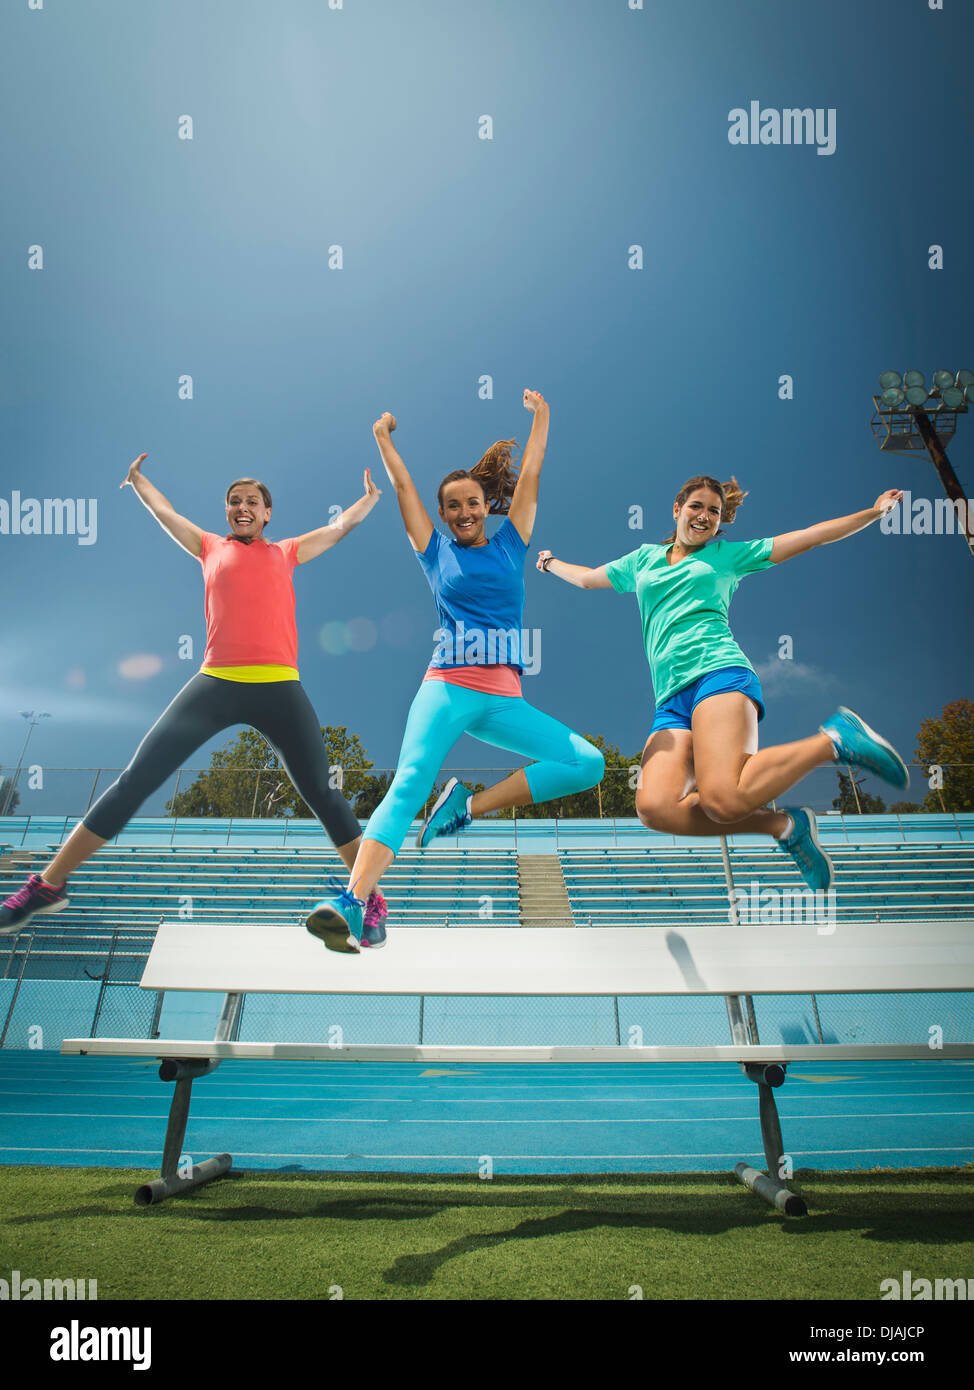 Caucasian women jumping for joy in stadium Stock Photo